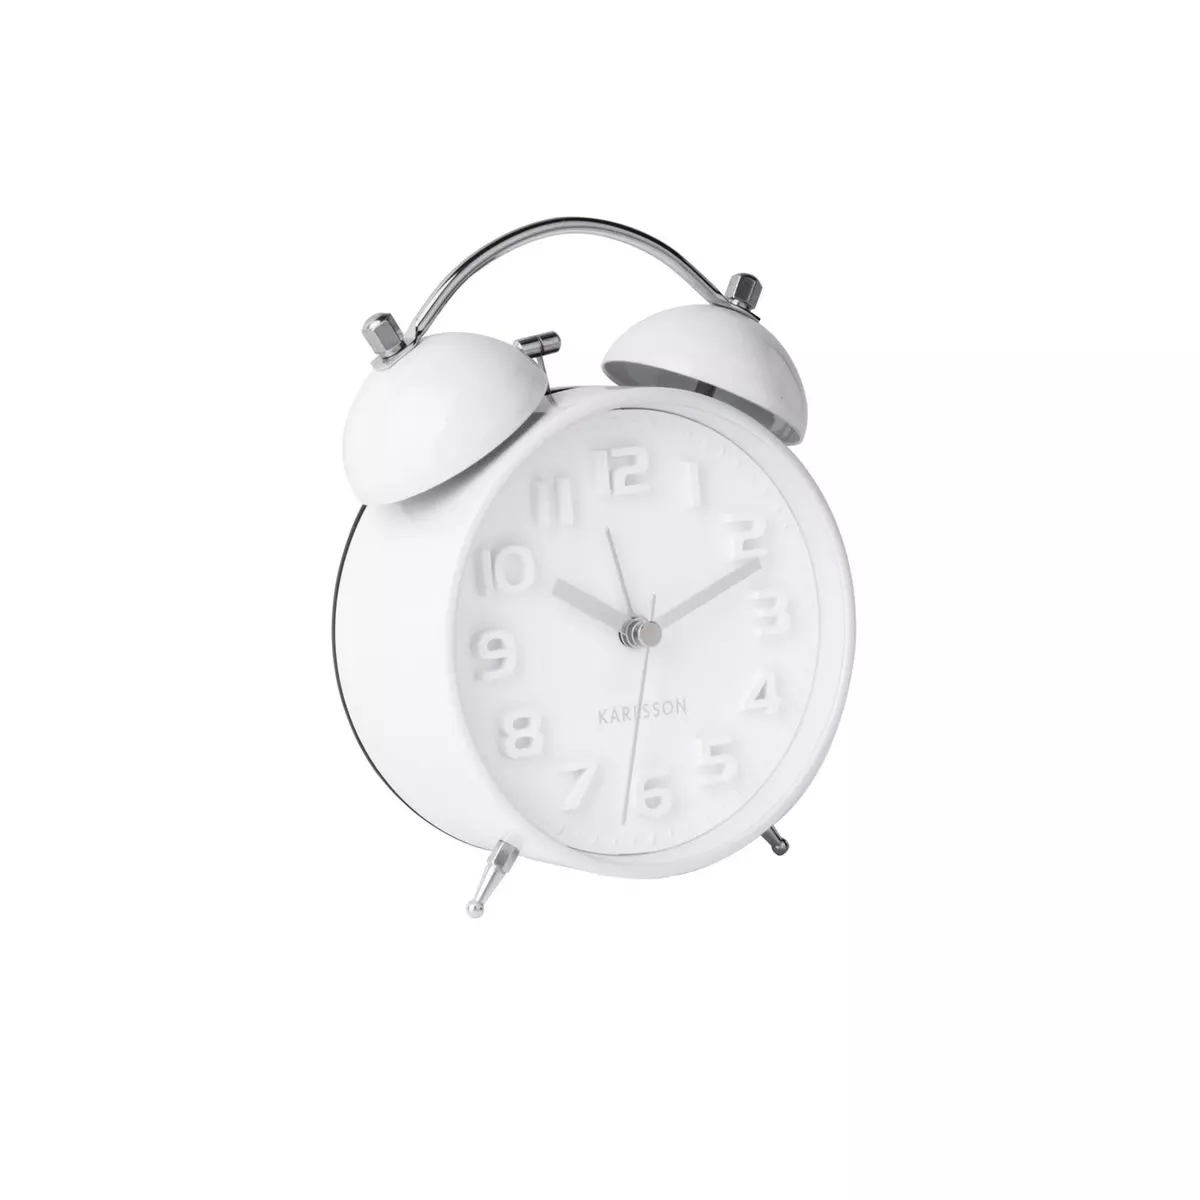 Karlsson Horloge réveil rétro Mr. White - Diam. 11 cm - Blanc